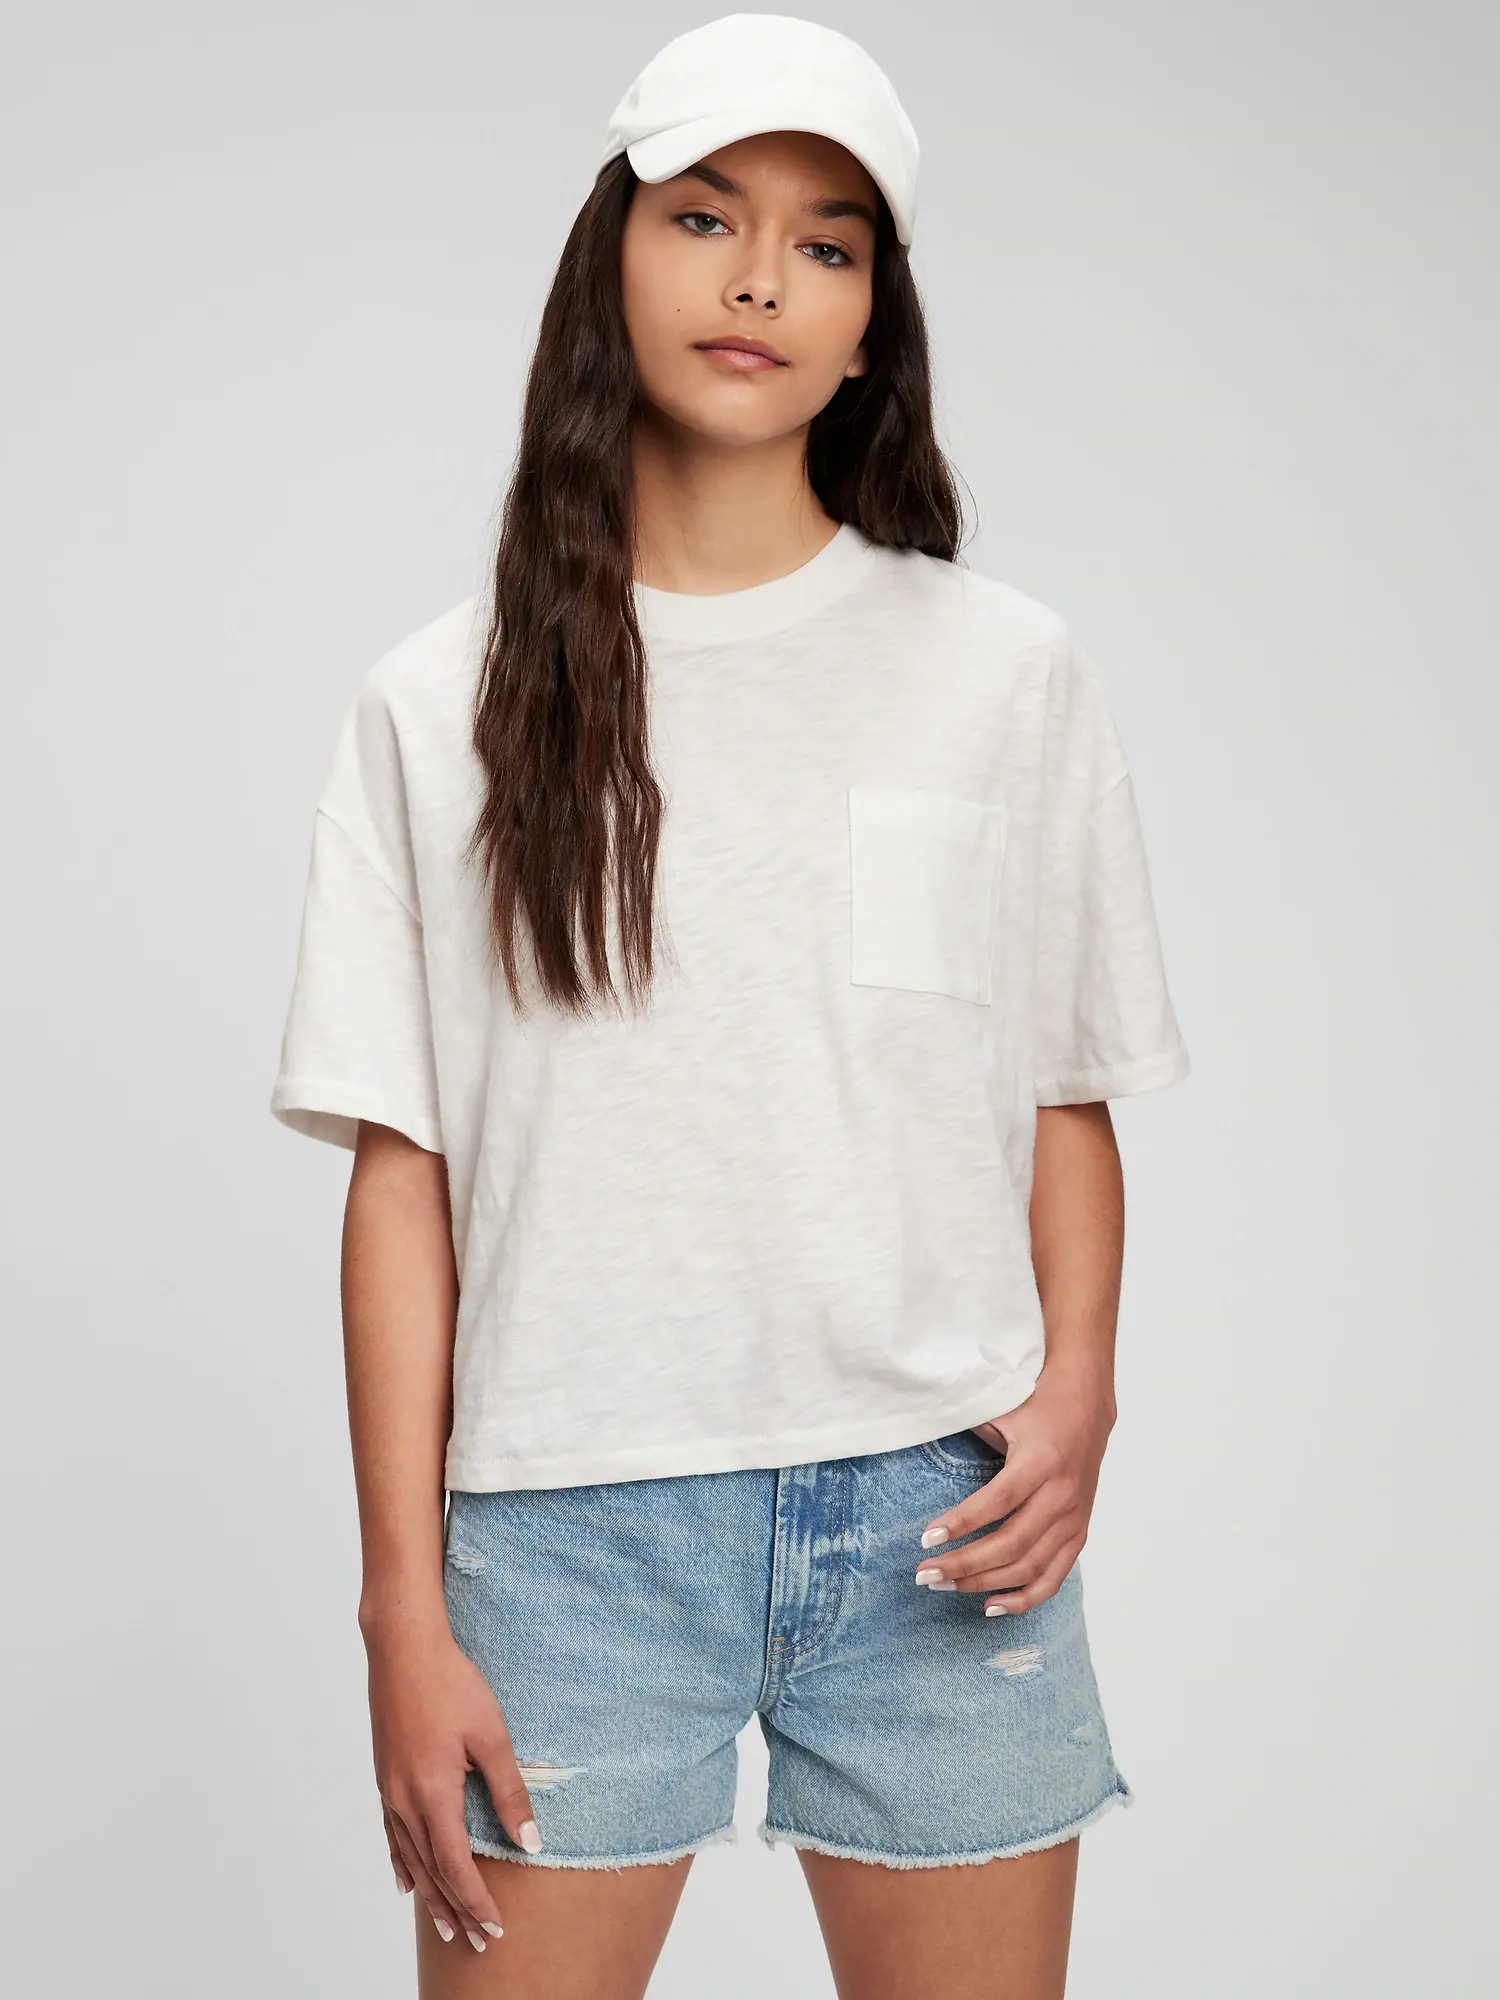 Gap Teen 100% Organic Cotton Pocket T-Shirt white. 1